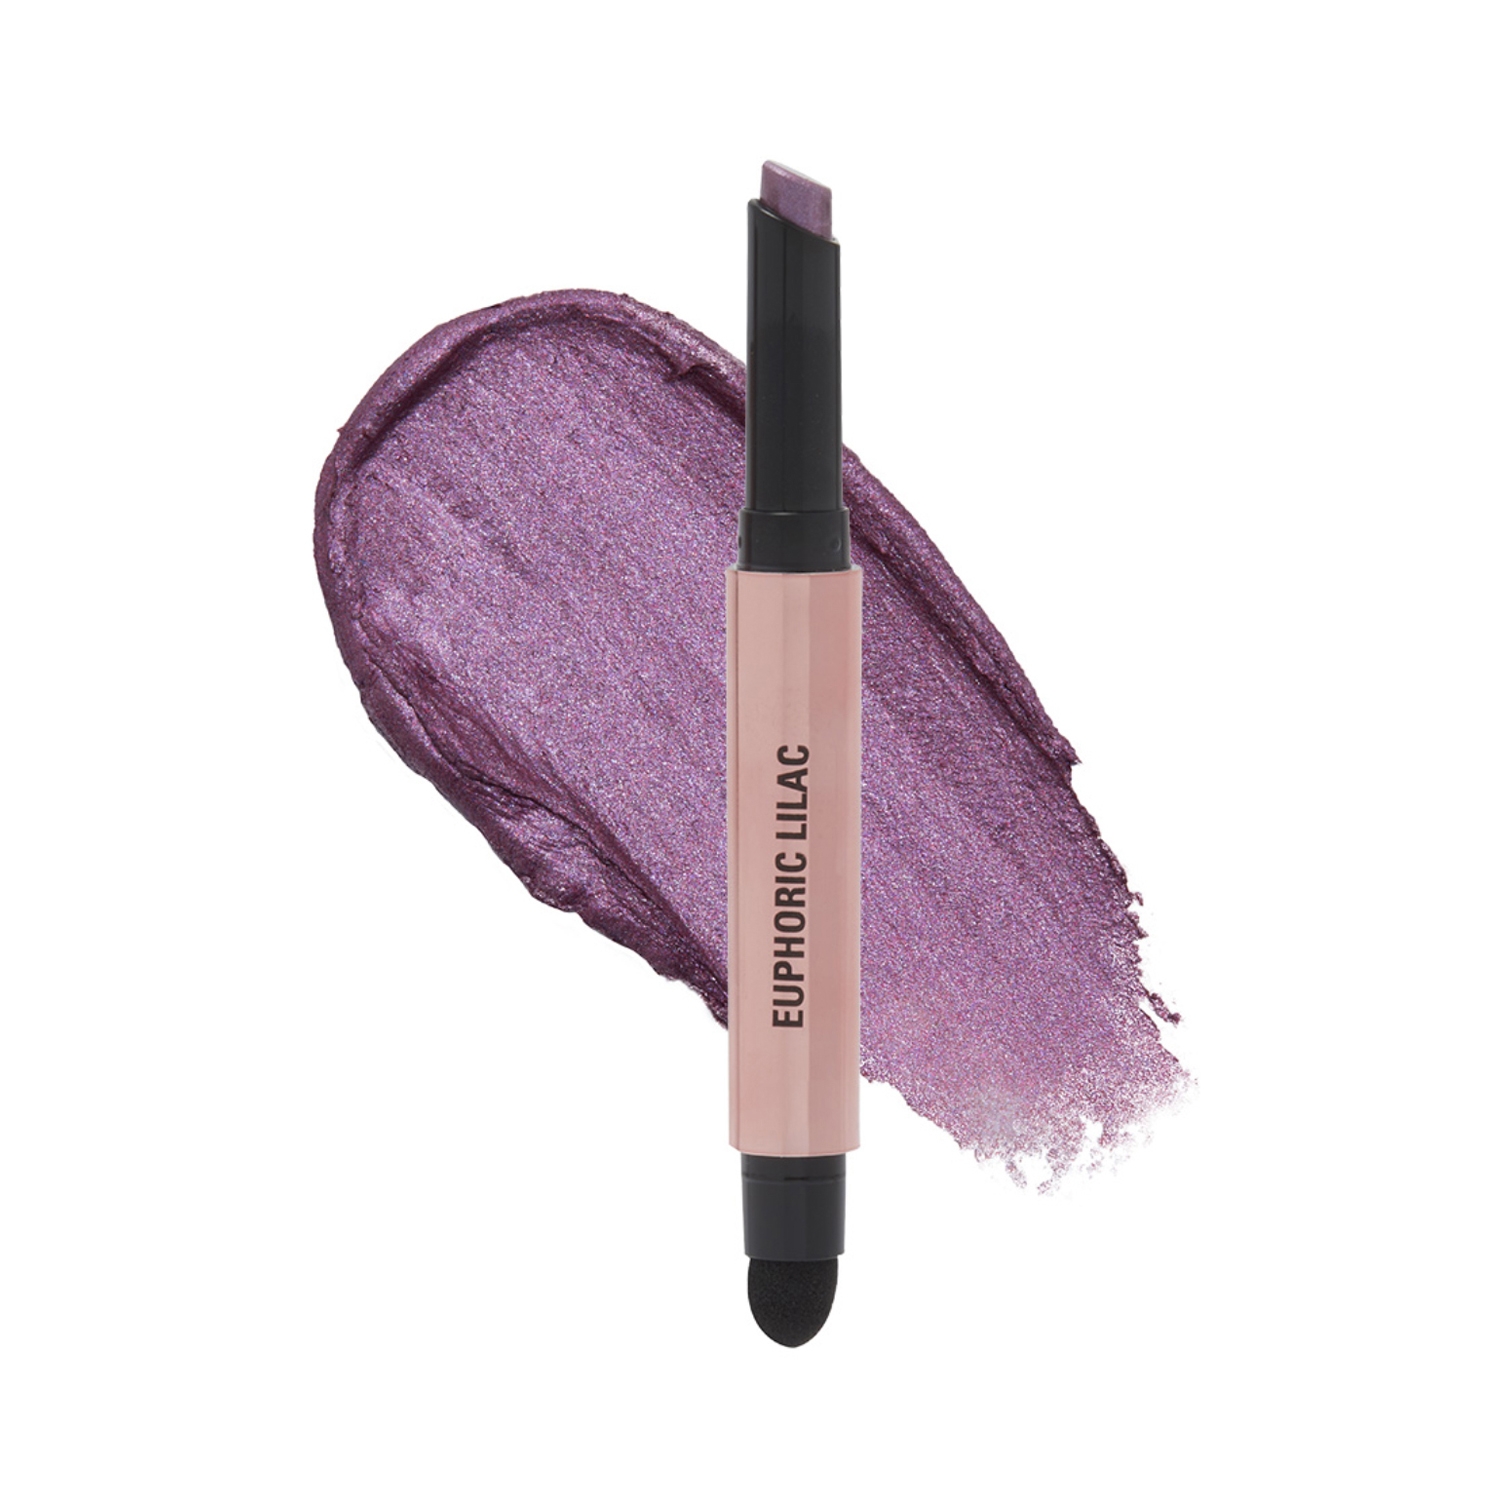 Makeup Revolution | Makeup Revolution Lustre Wand Eyeshadow Stick - Euphoric Lilac (1.6g)